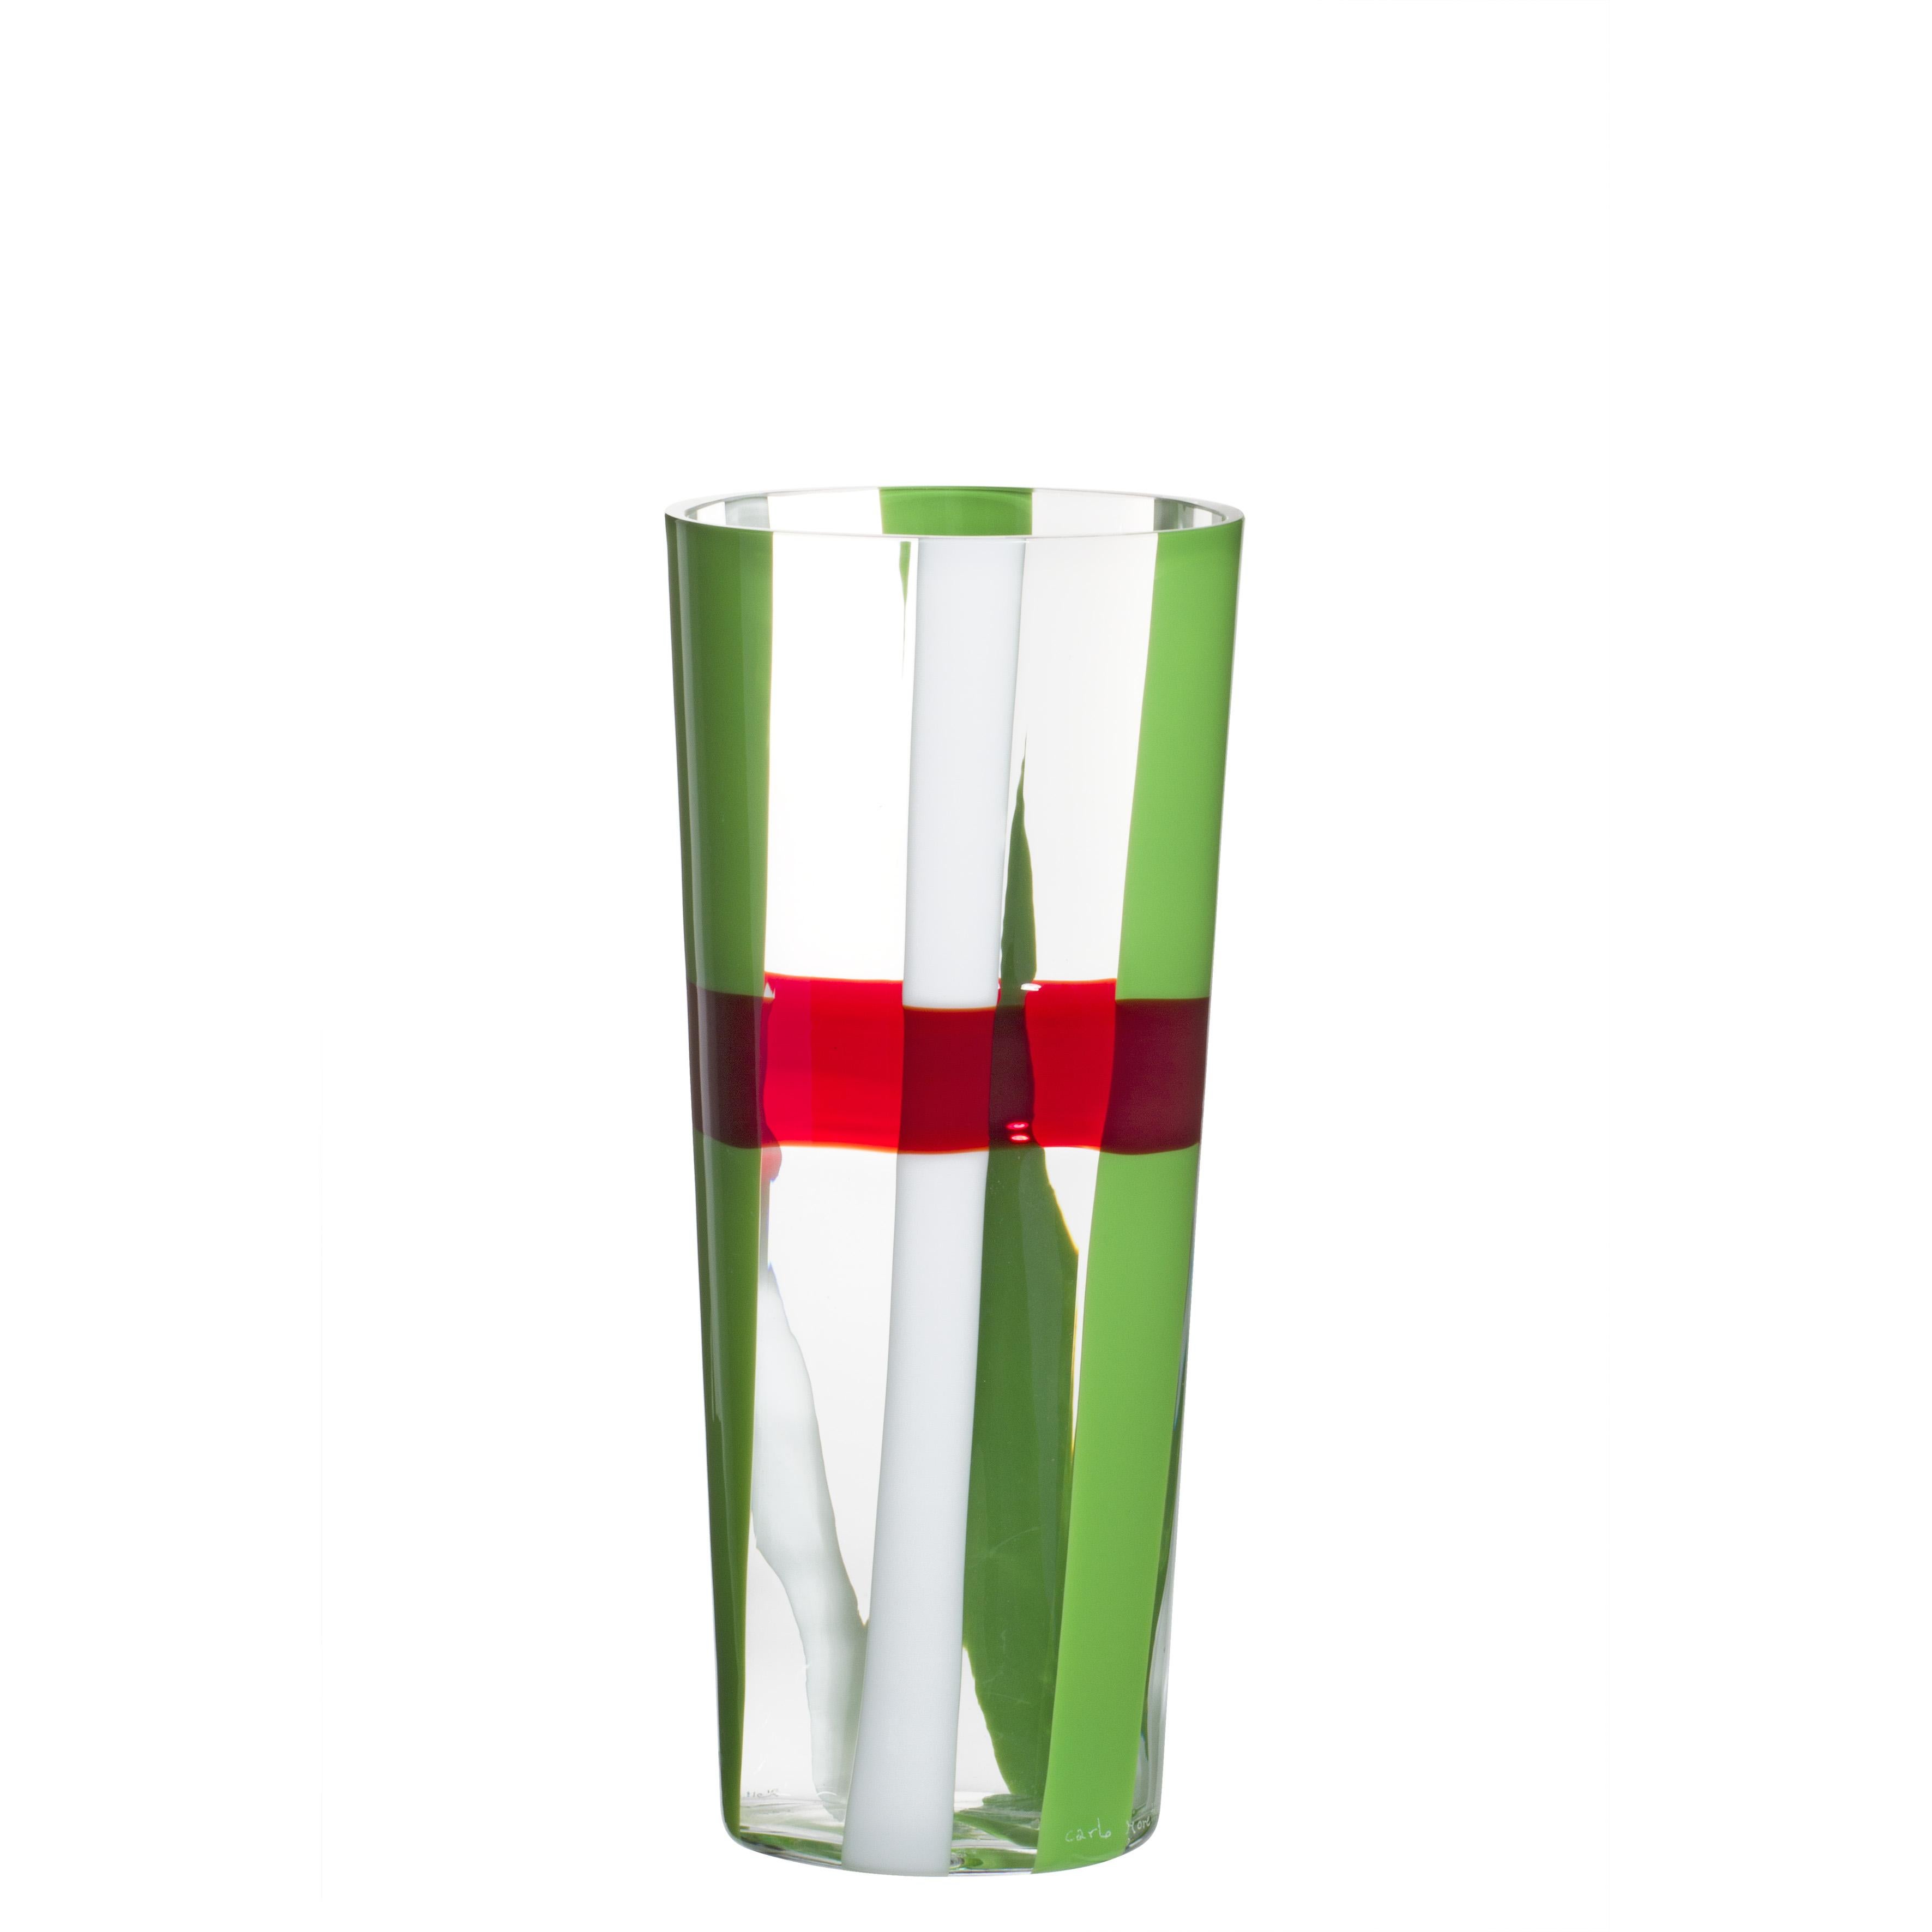 Troncocono-Vase in Rot und Grün von Carlo Moretti